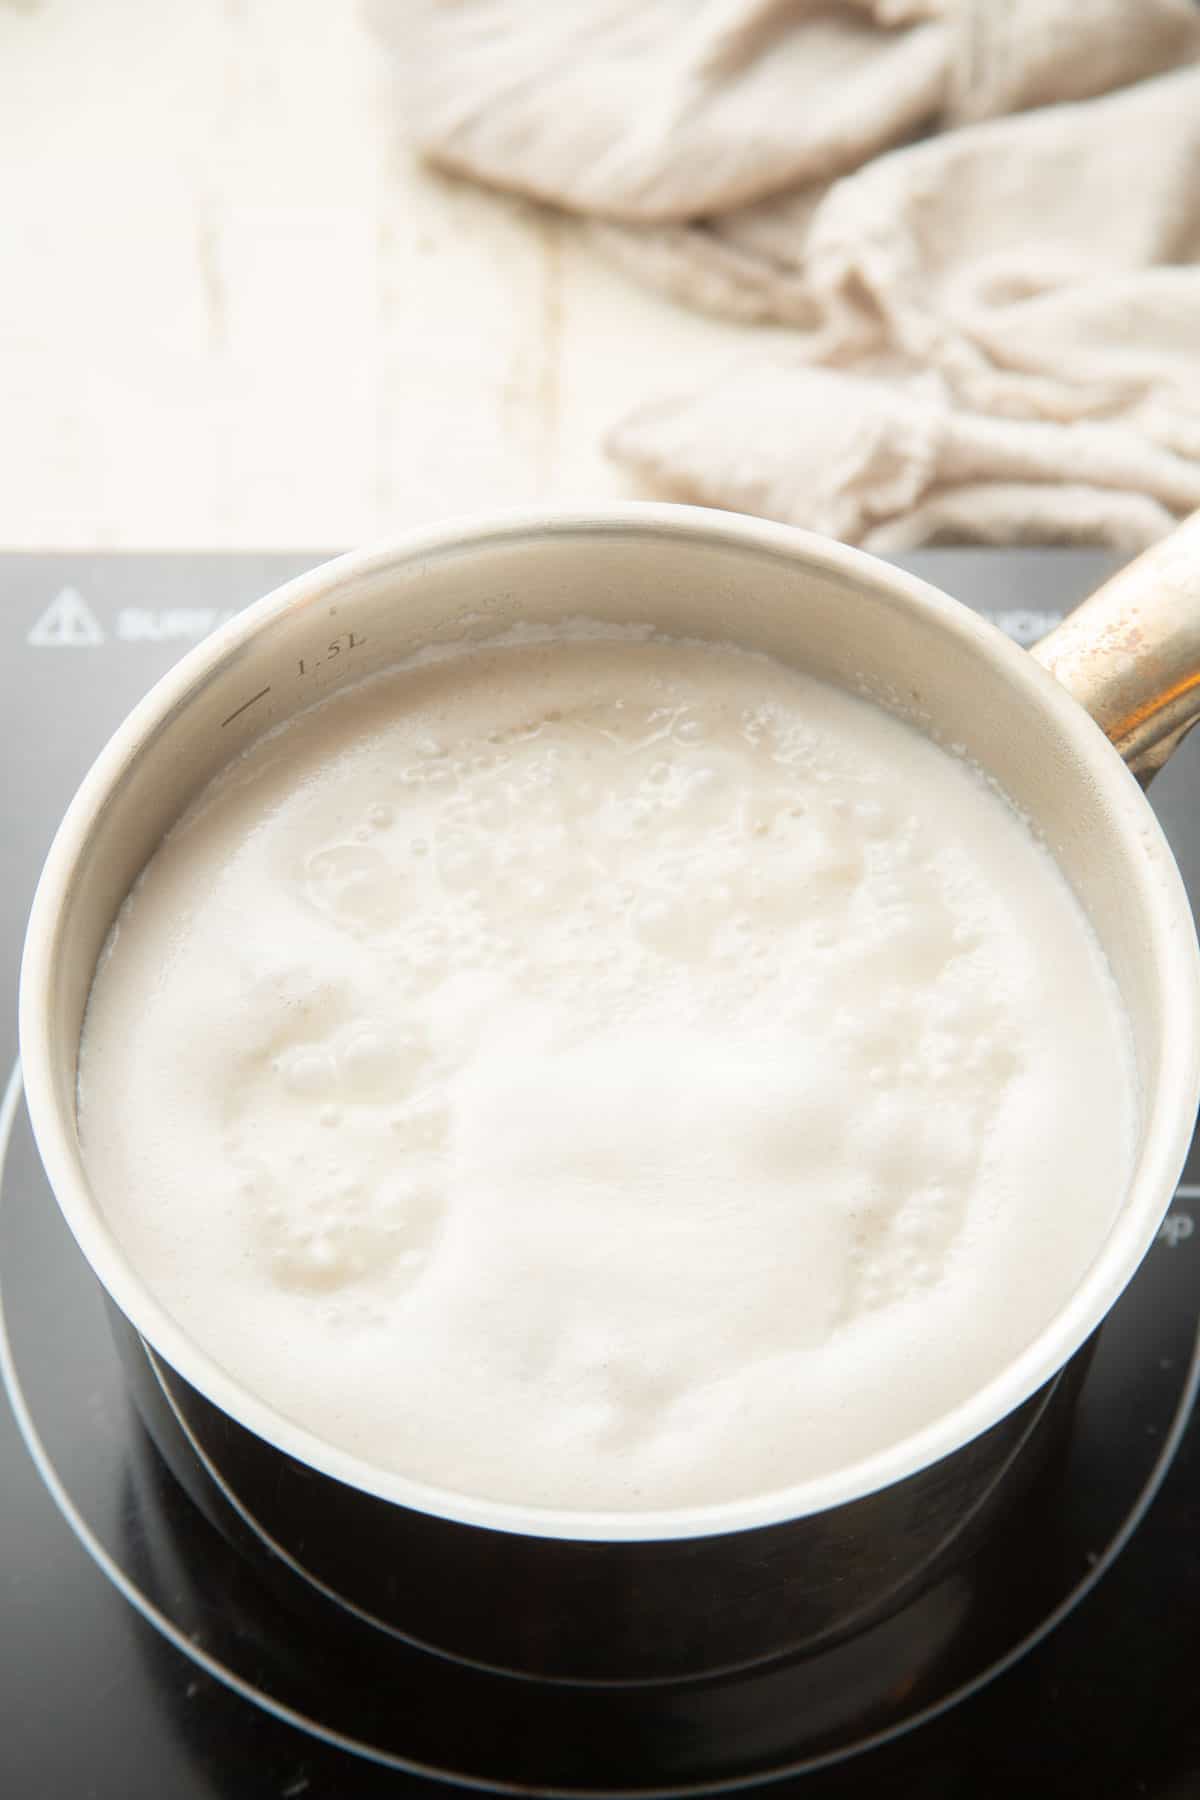 Tapioca pearls simmering in non-dairy milk.